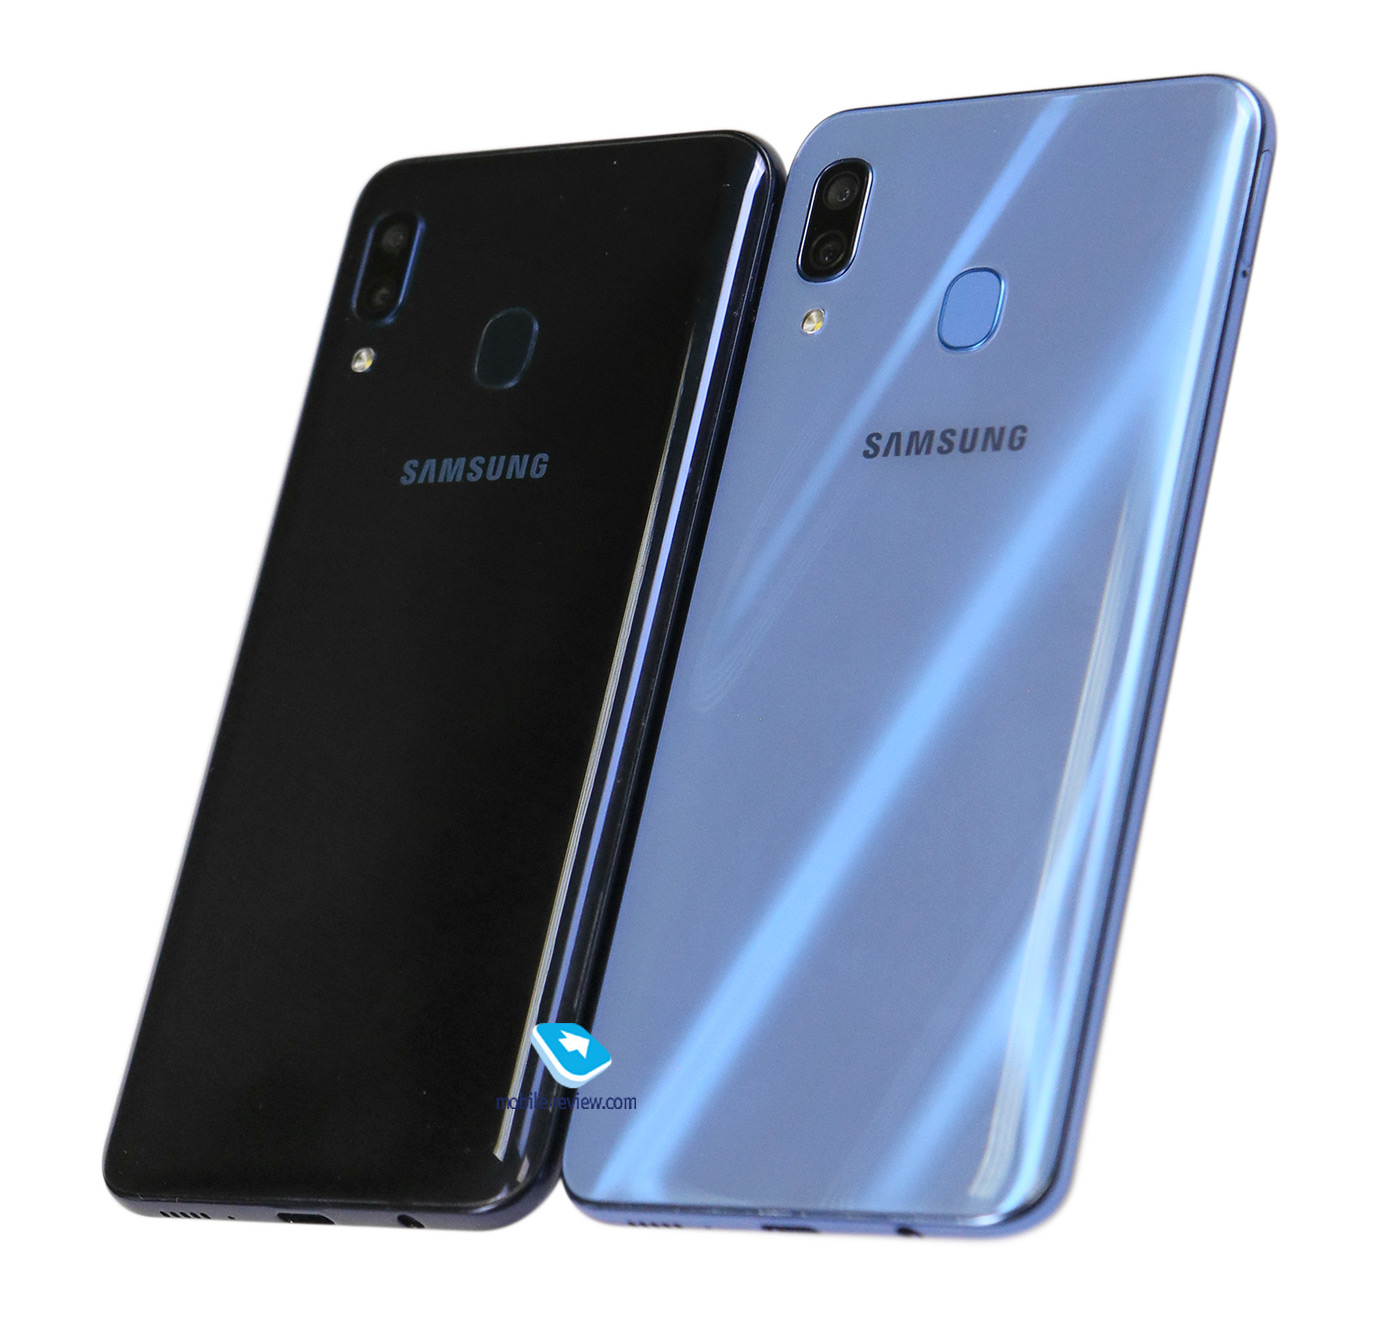   Samsung A30 2019